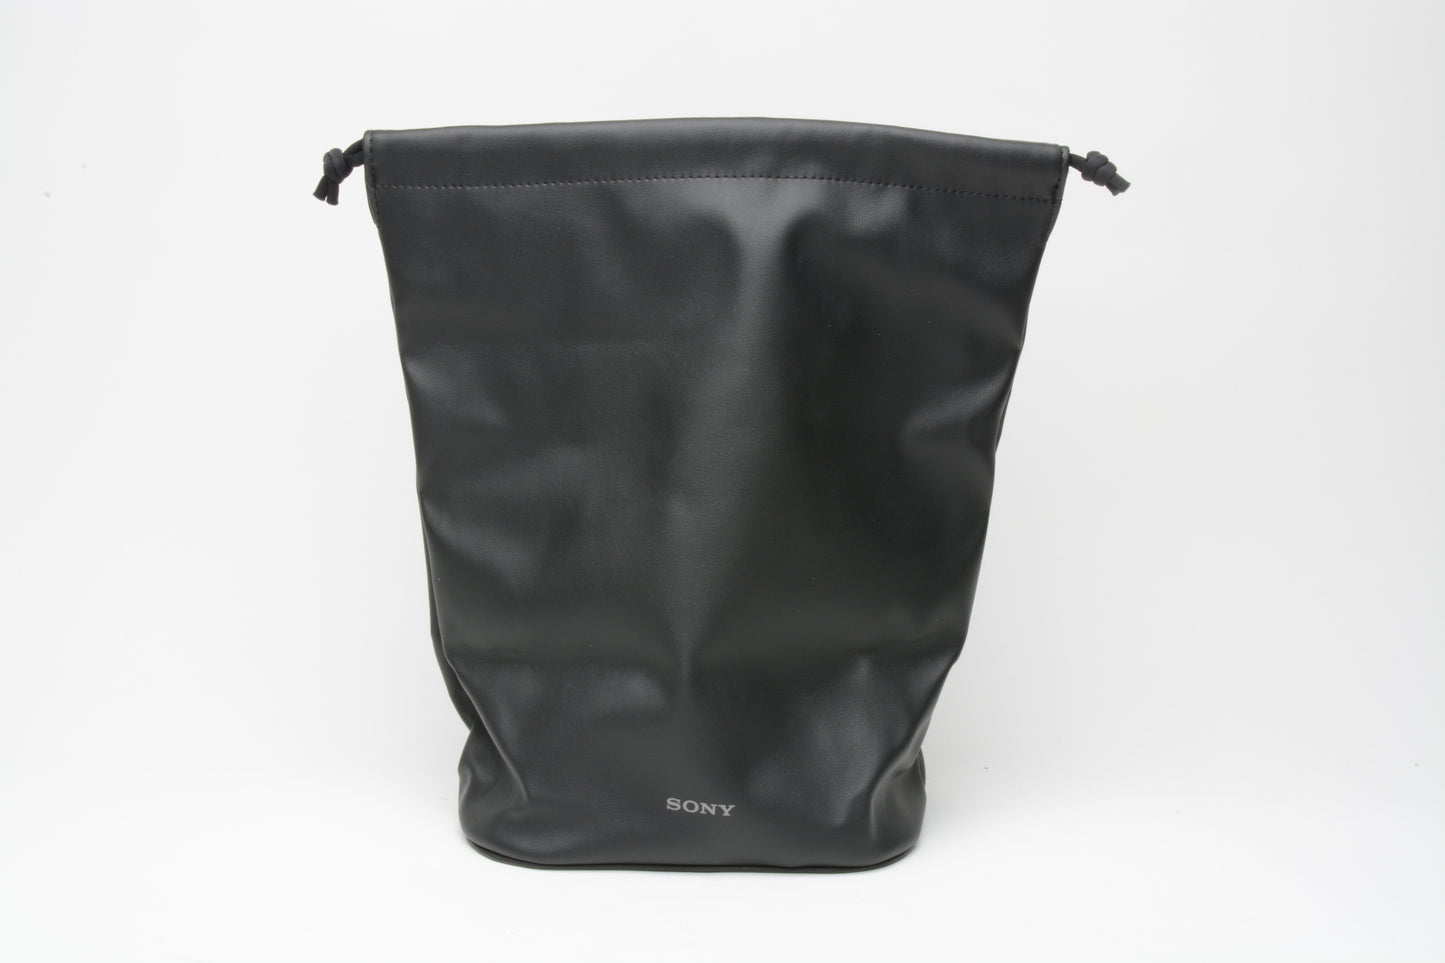 Sony soft pouch rectangular base 7x5" x10" tall